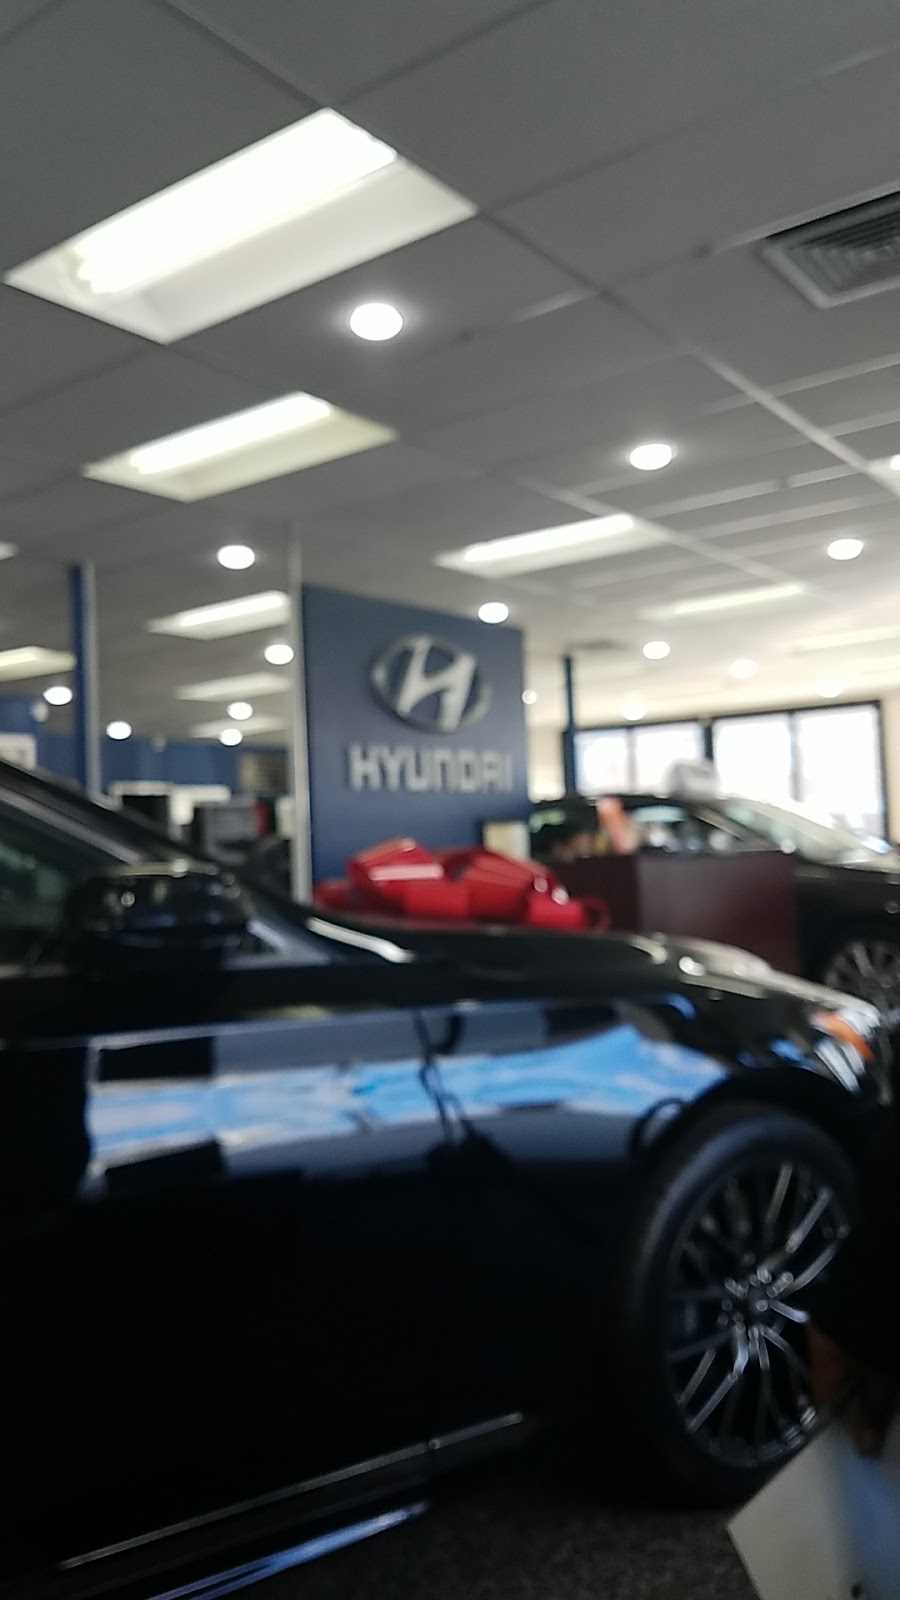 City World Hyundai | 3350 Boston Rd, Bronx, NY 10469, USA | Phone: (888) 886-3571